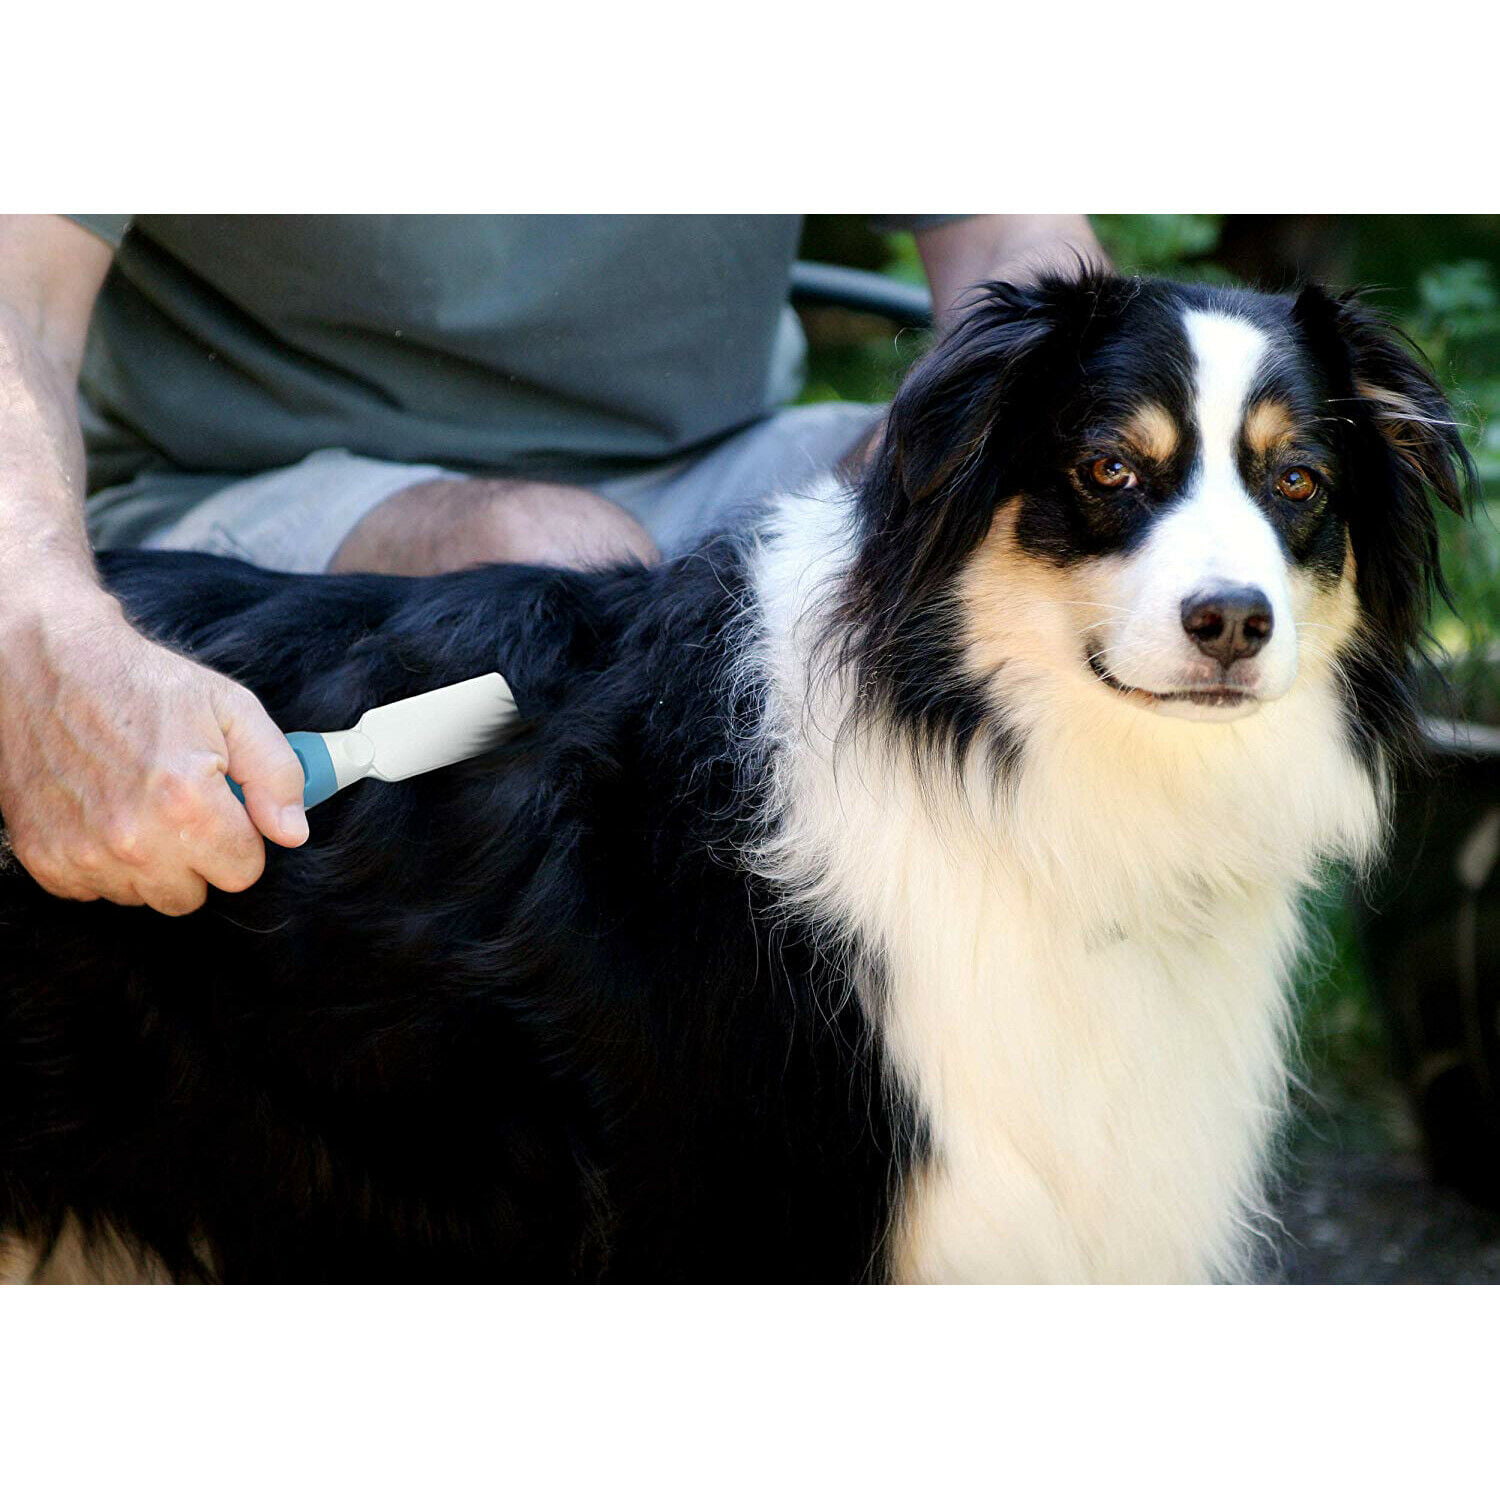  Pets First Professional Pet Mat Remover - Dematting